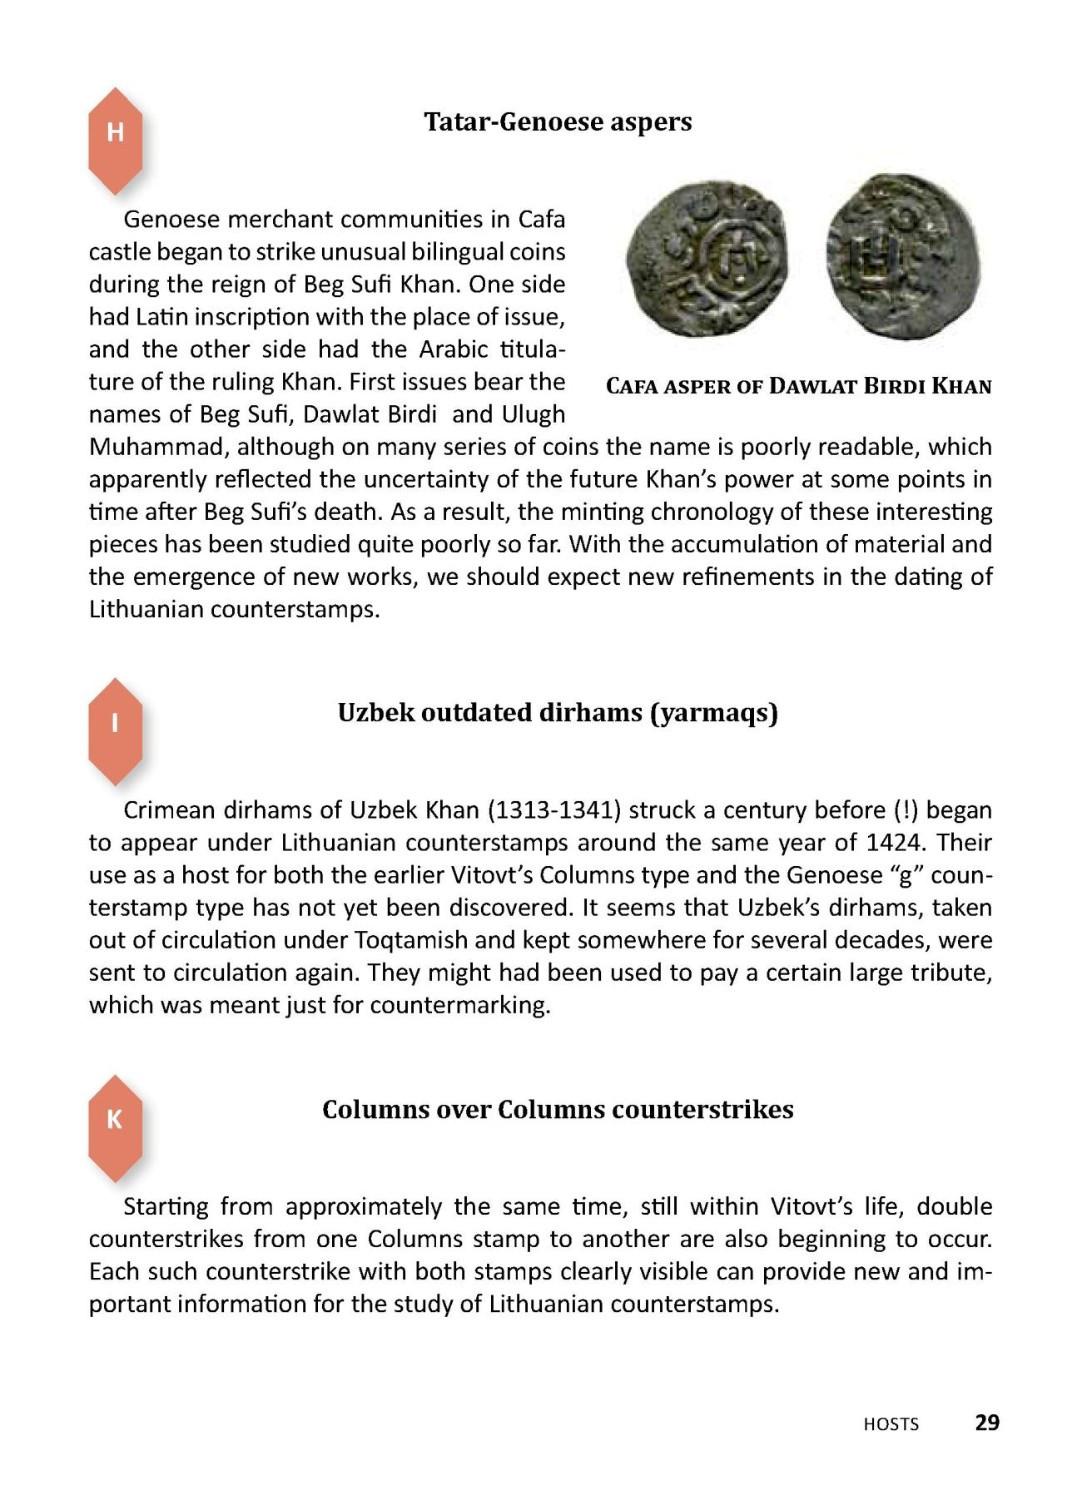 LDK monetų katalogas ,,Lithuanian Counterstamps 1421-1481“